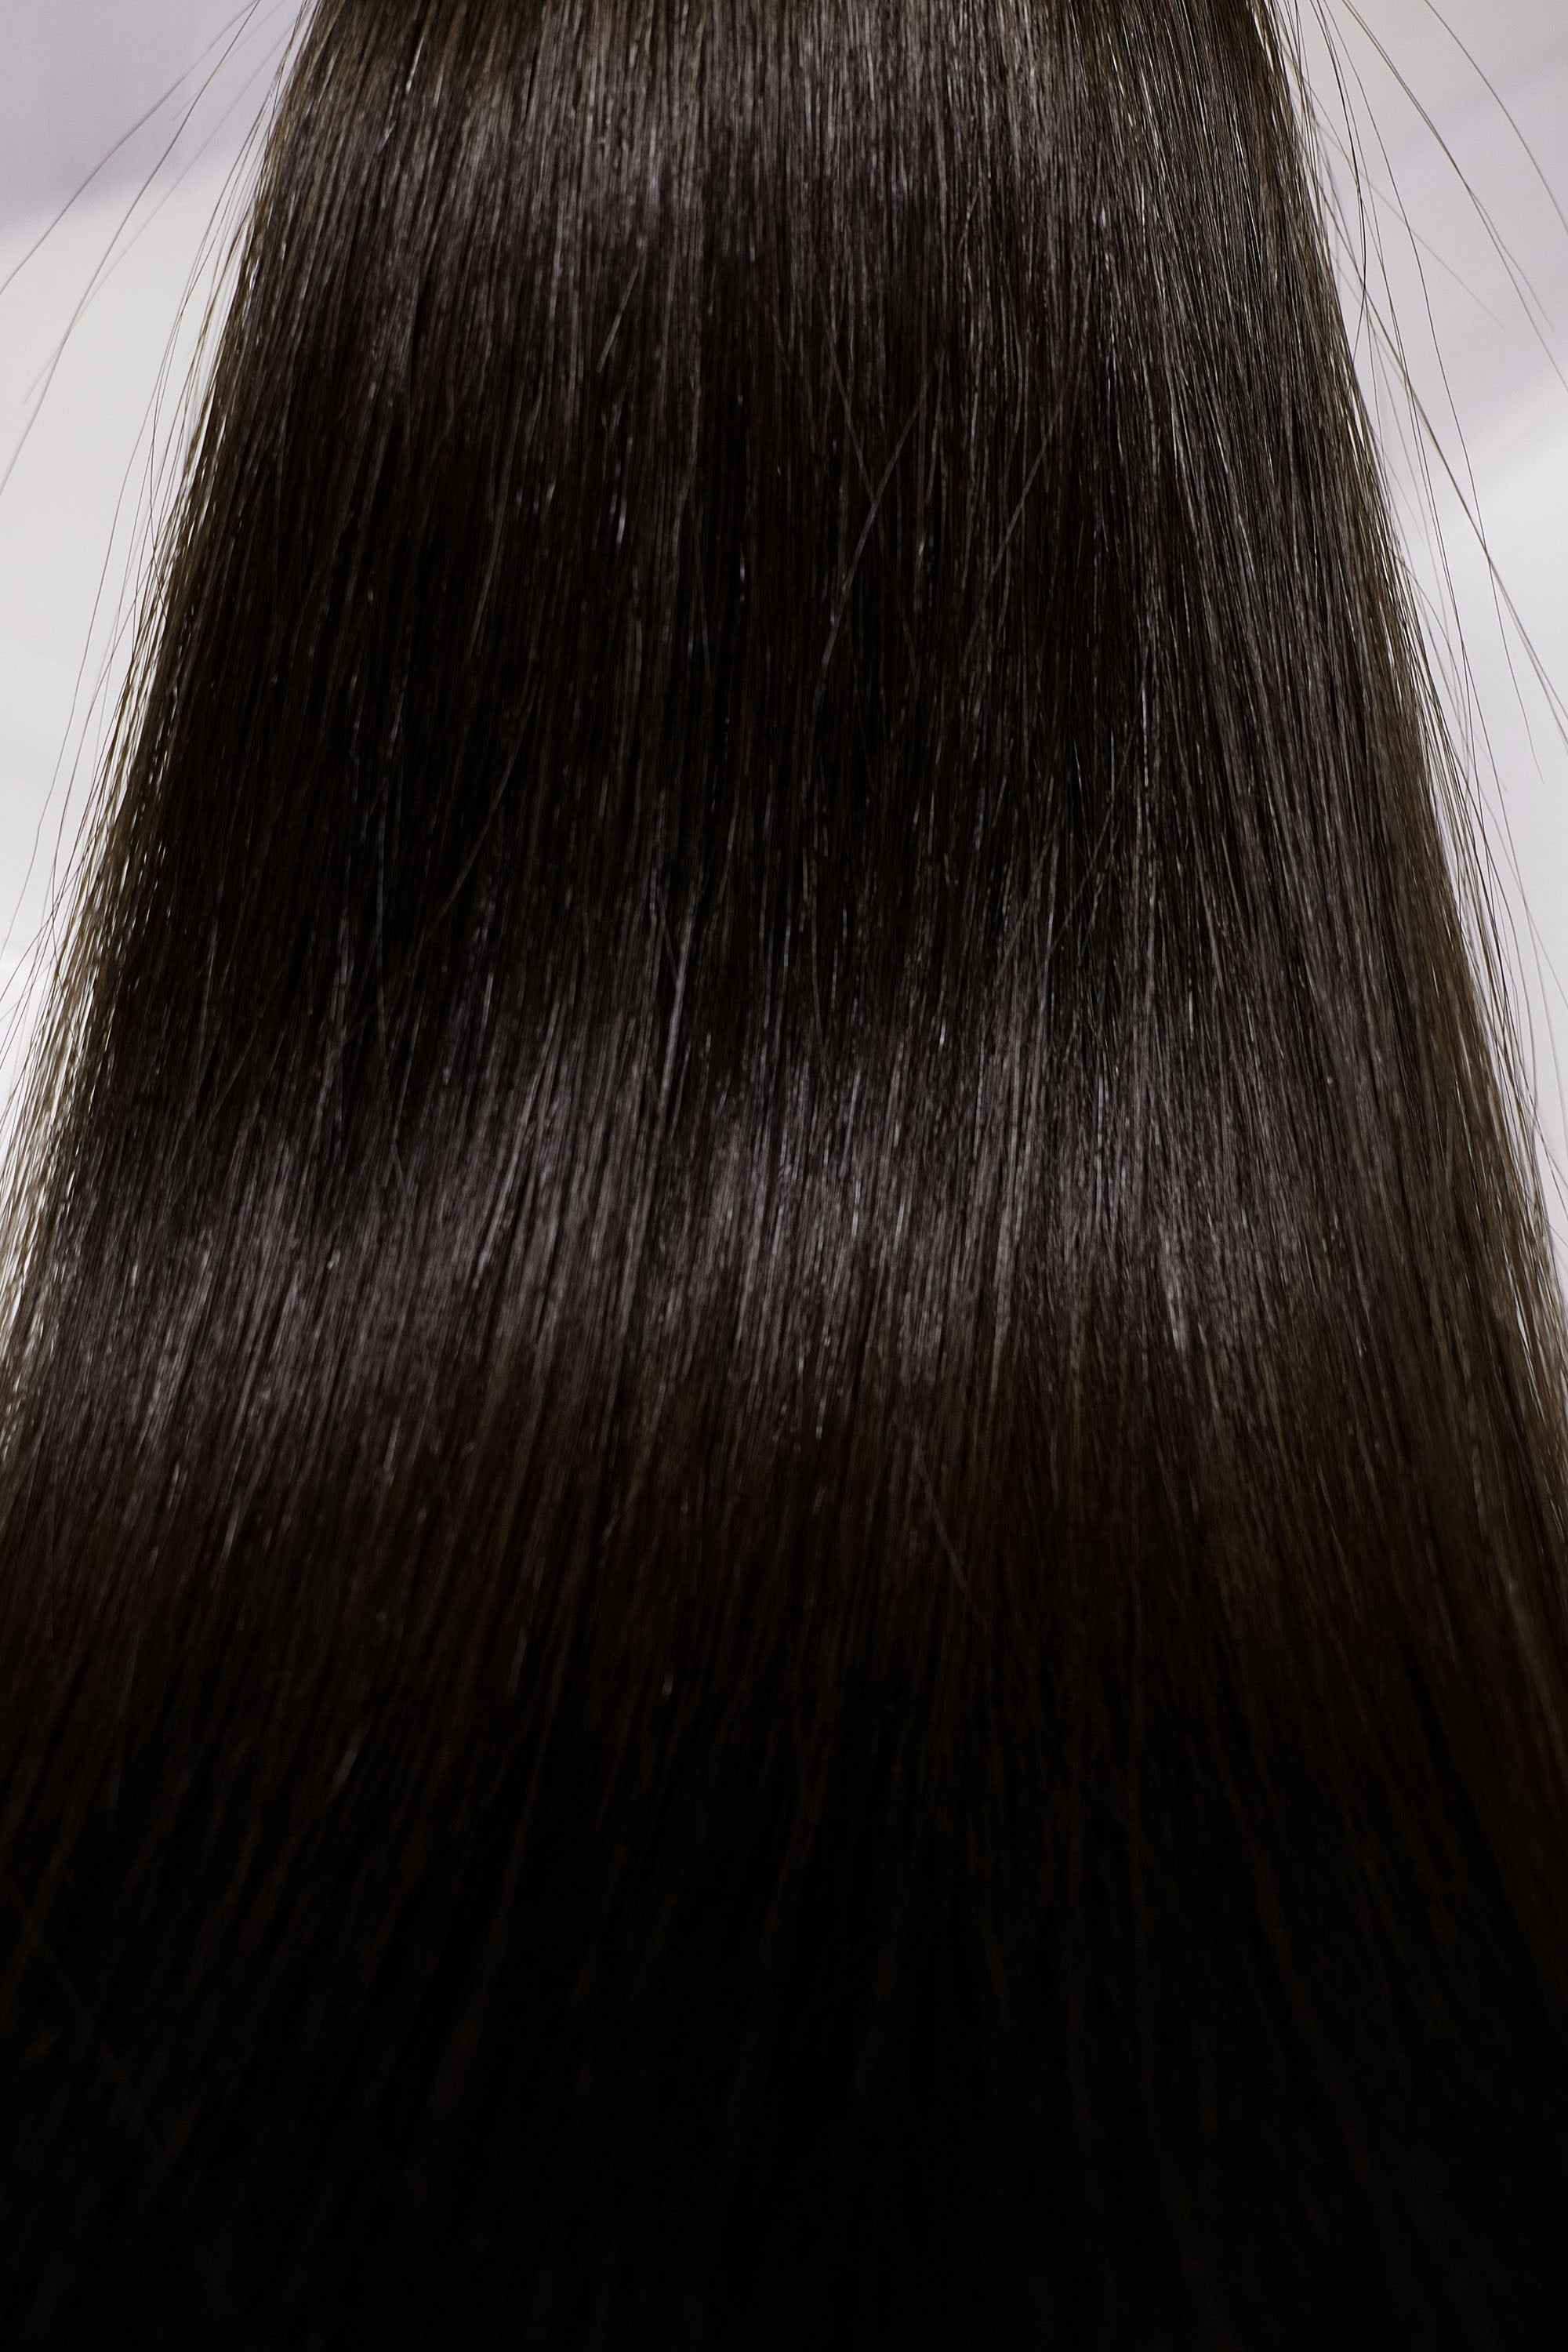 Behair professional Keratin Tip "Premium" 26" (65cm) Natural Straight Natural Black #1B - 25g (Standart - 0.7g each pcs) hair extensions